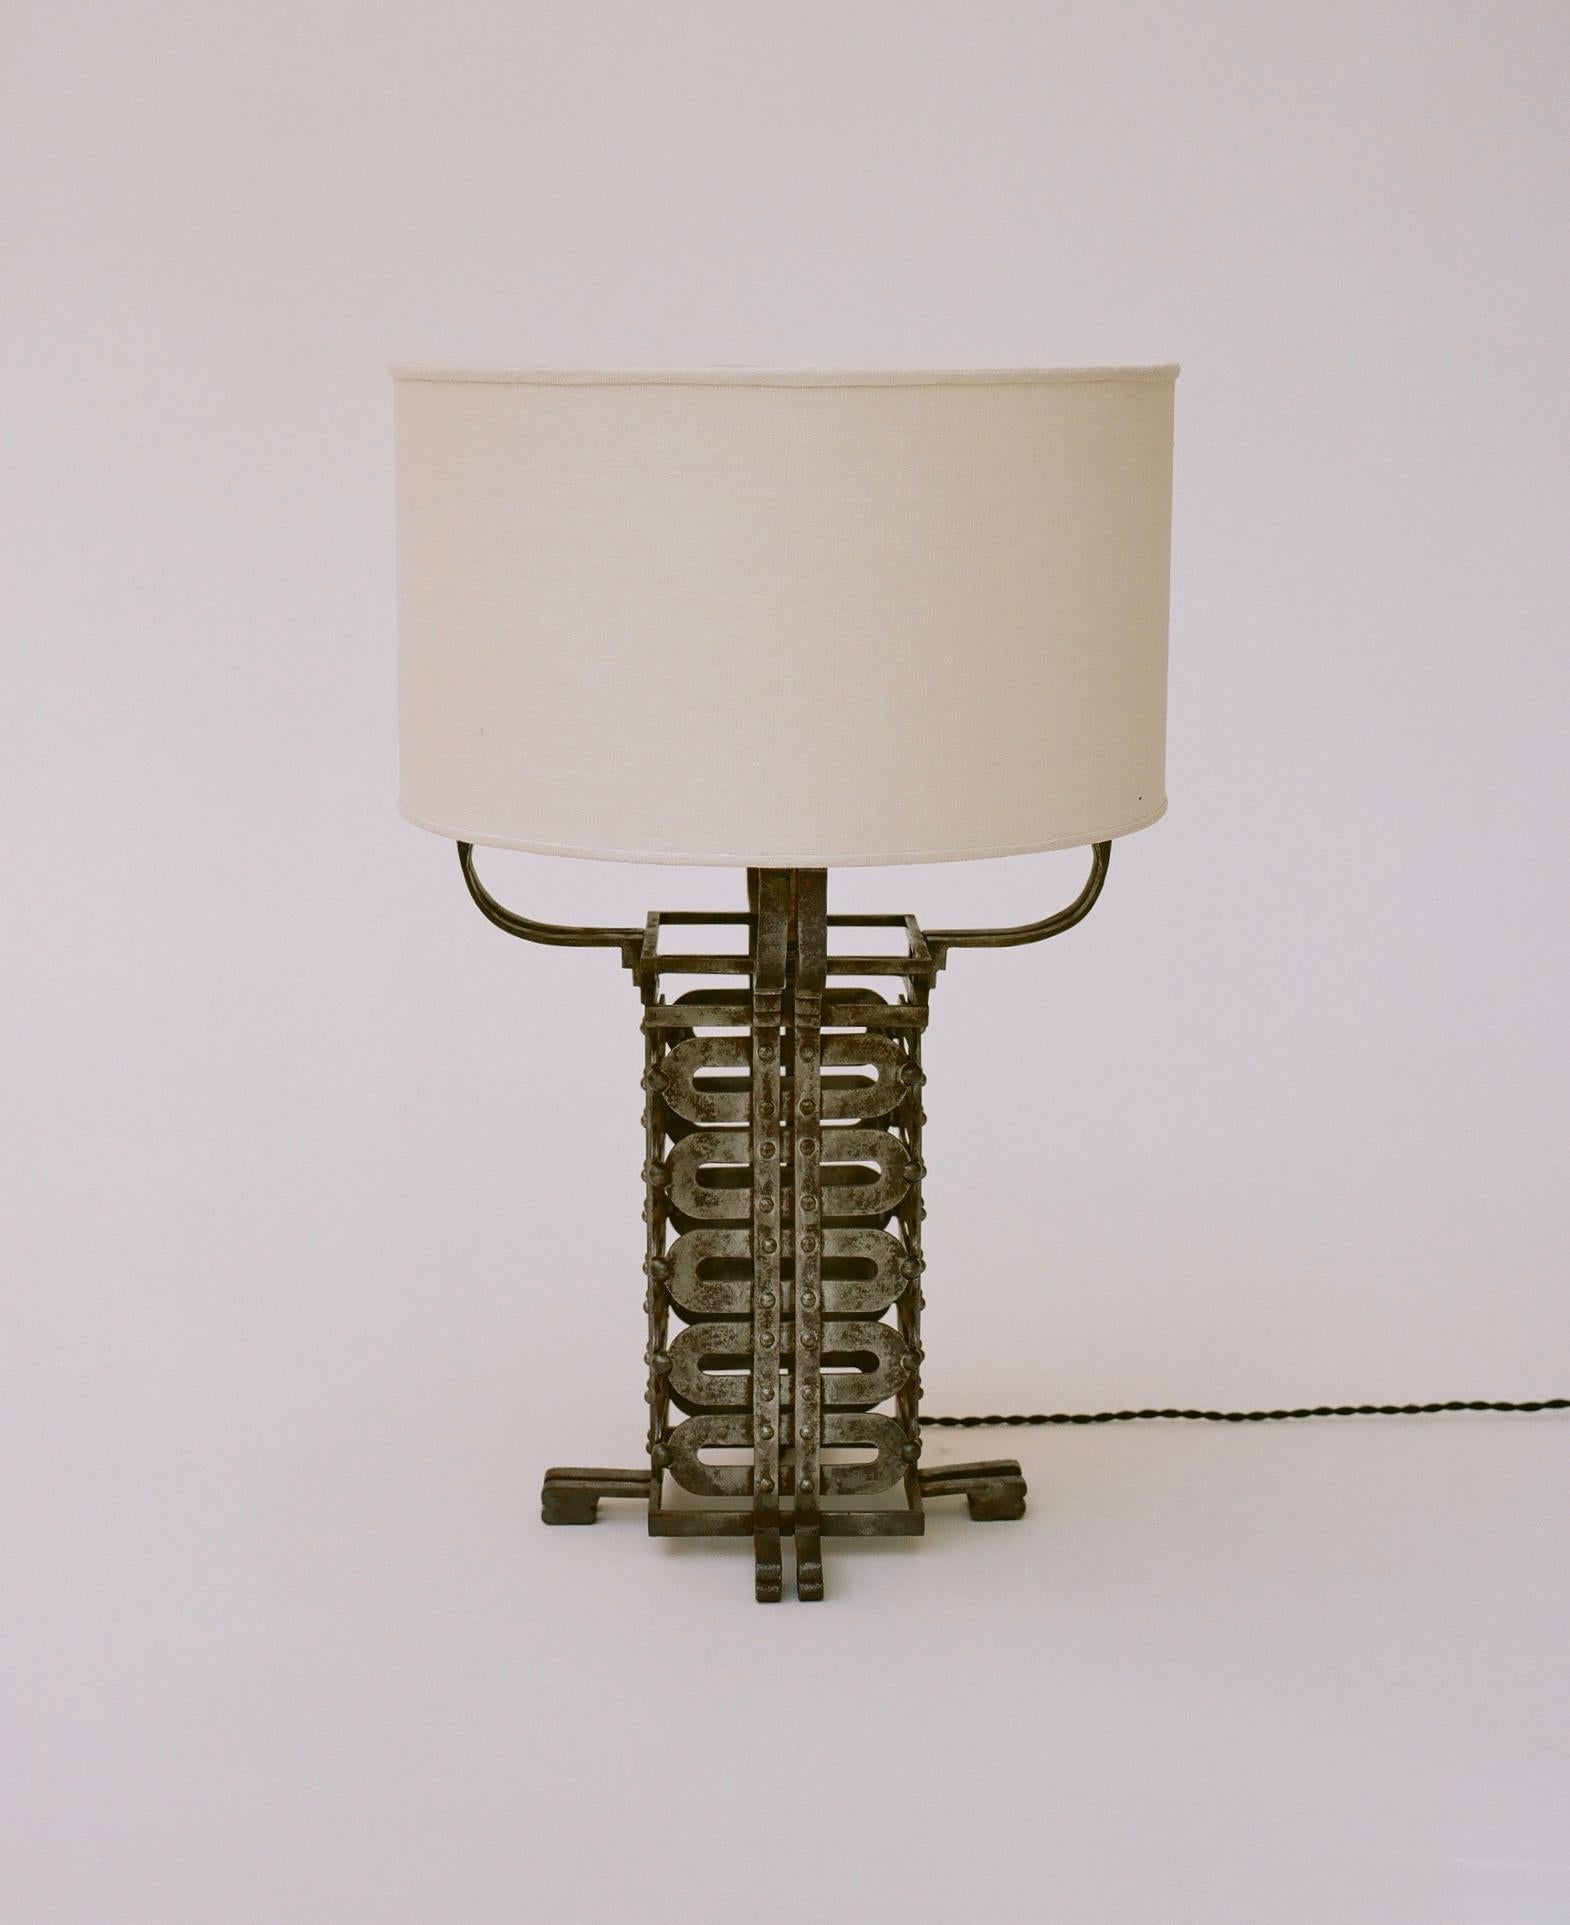 French Raymond Subes Ironwork Table Lamp, circa 1925